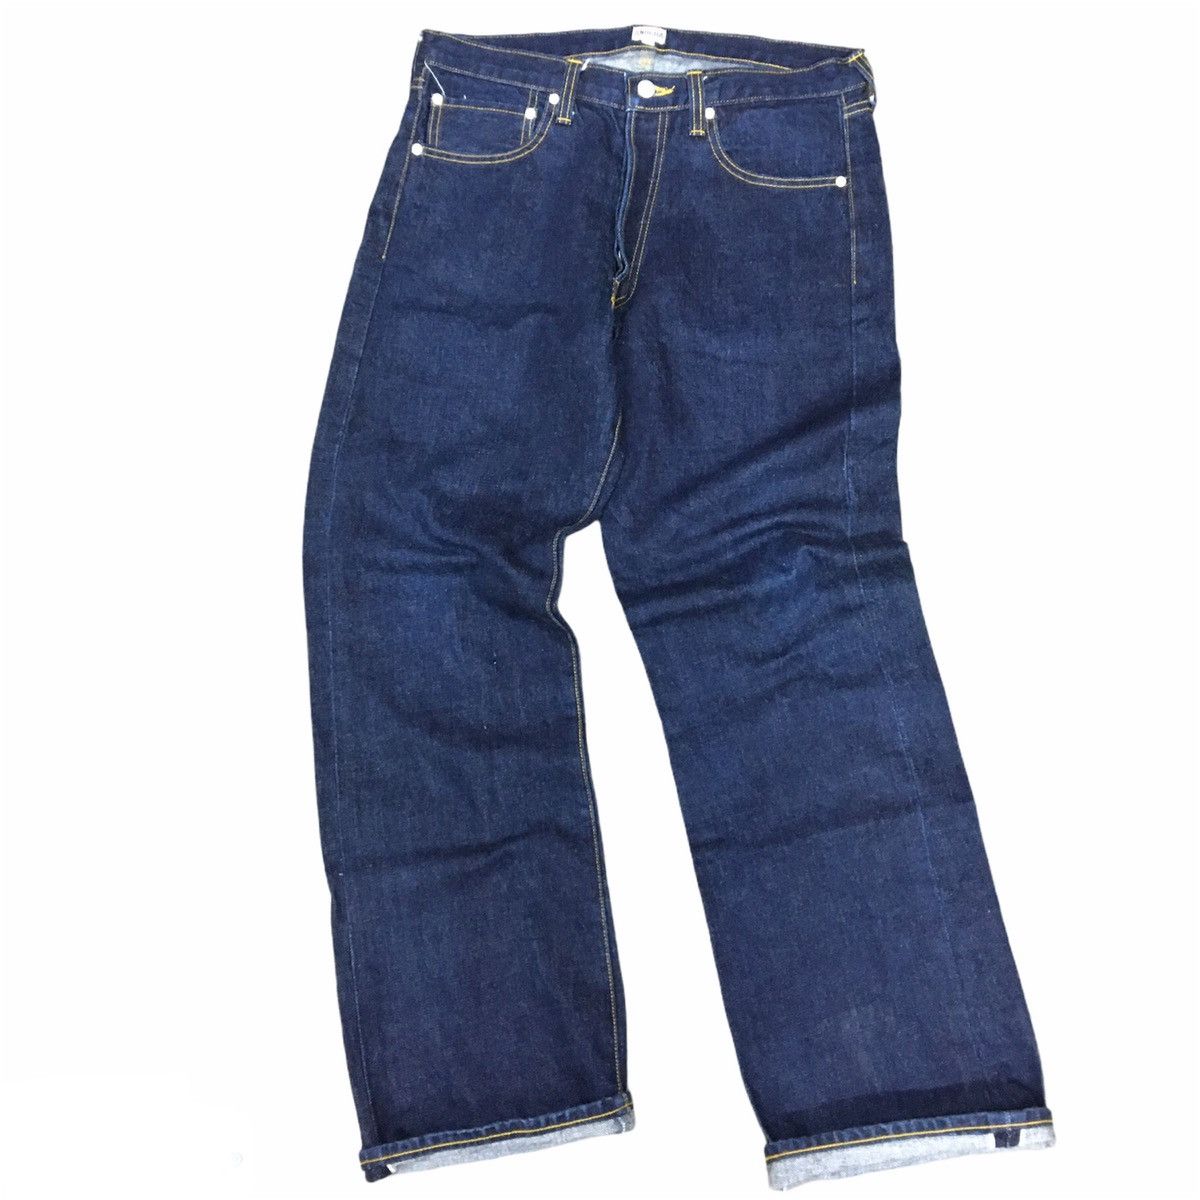 Japanese Brand Made In Japan Anokha Denim Jeans | Grailed